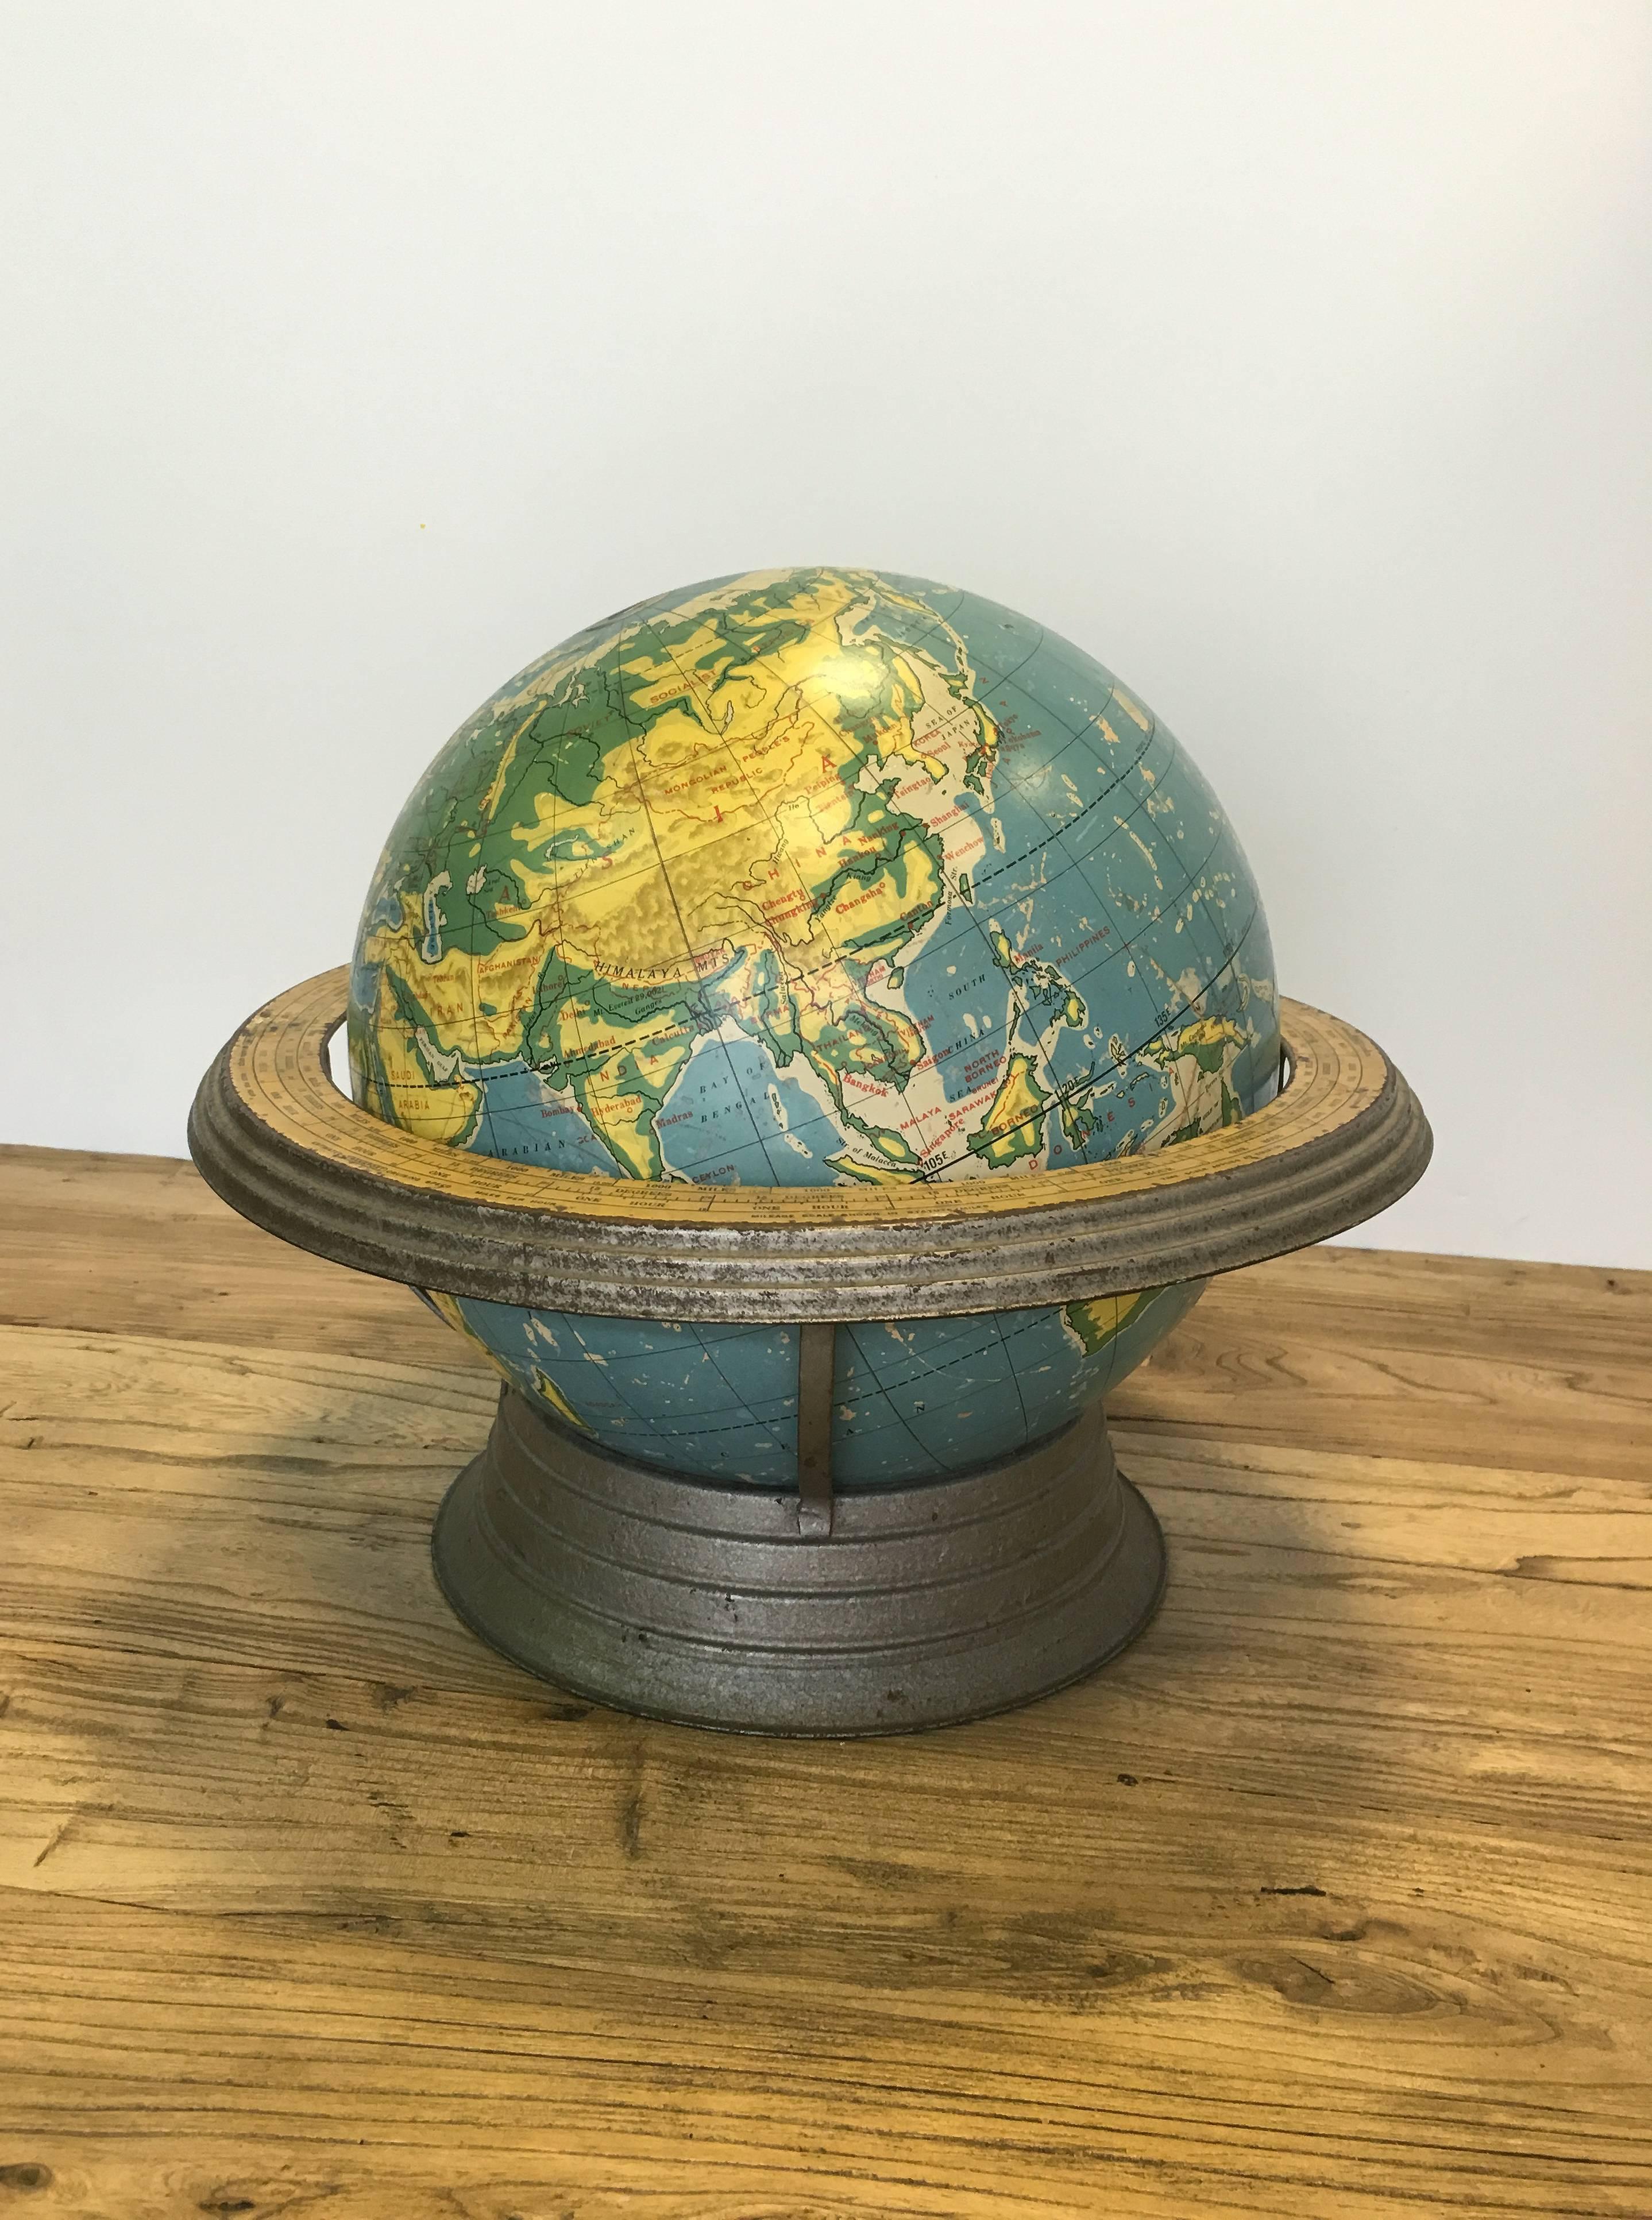 Cram's 12 inch terrestrial globe.